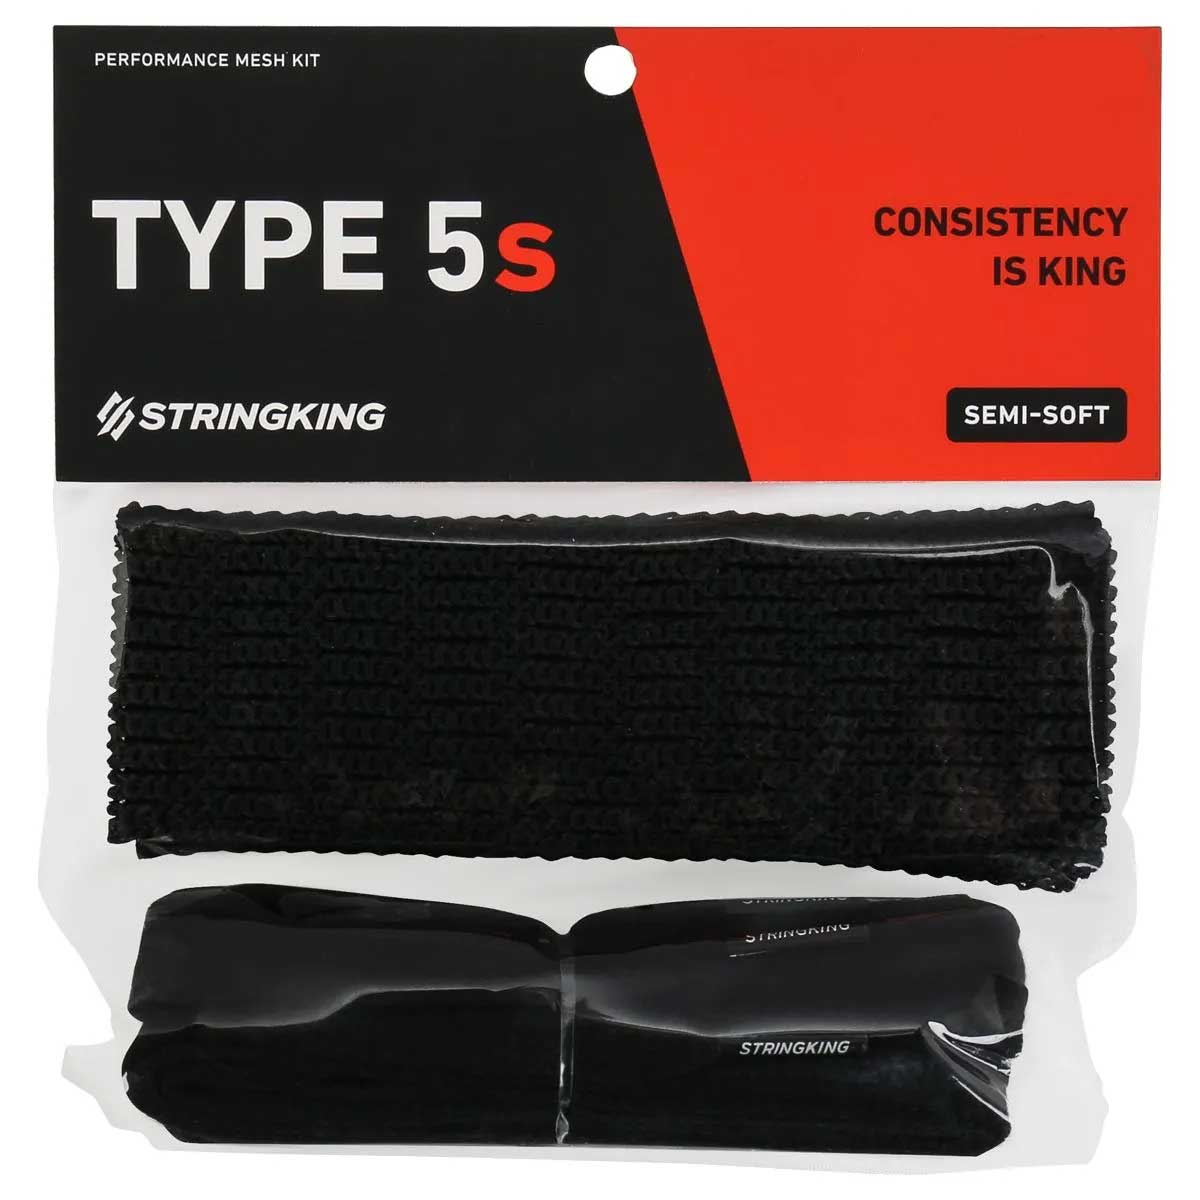 Picture of the black StringKing Type 5s Performance Lacrosse Mesh Kit